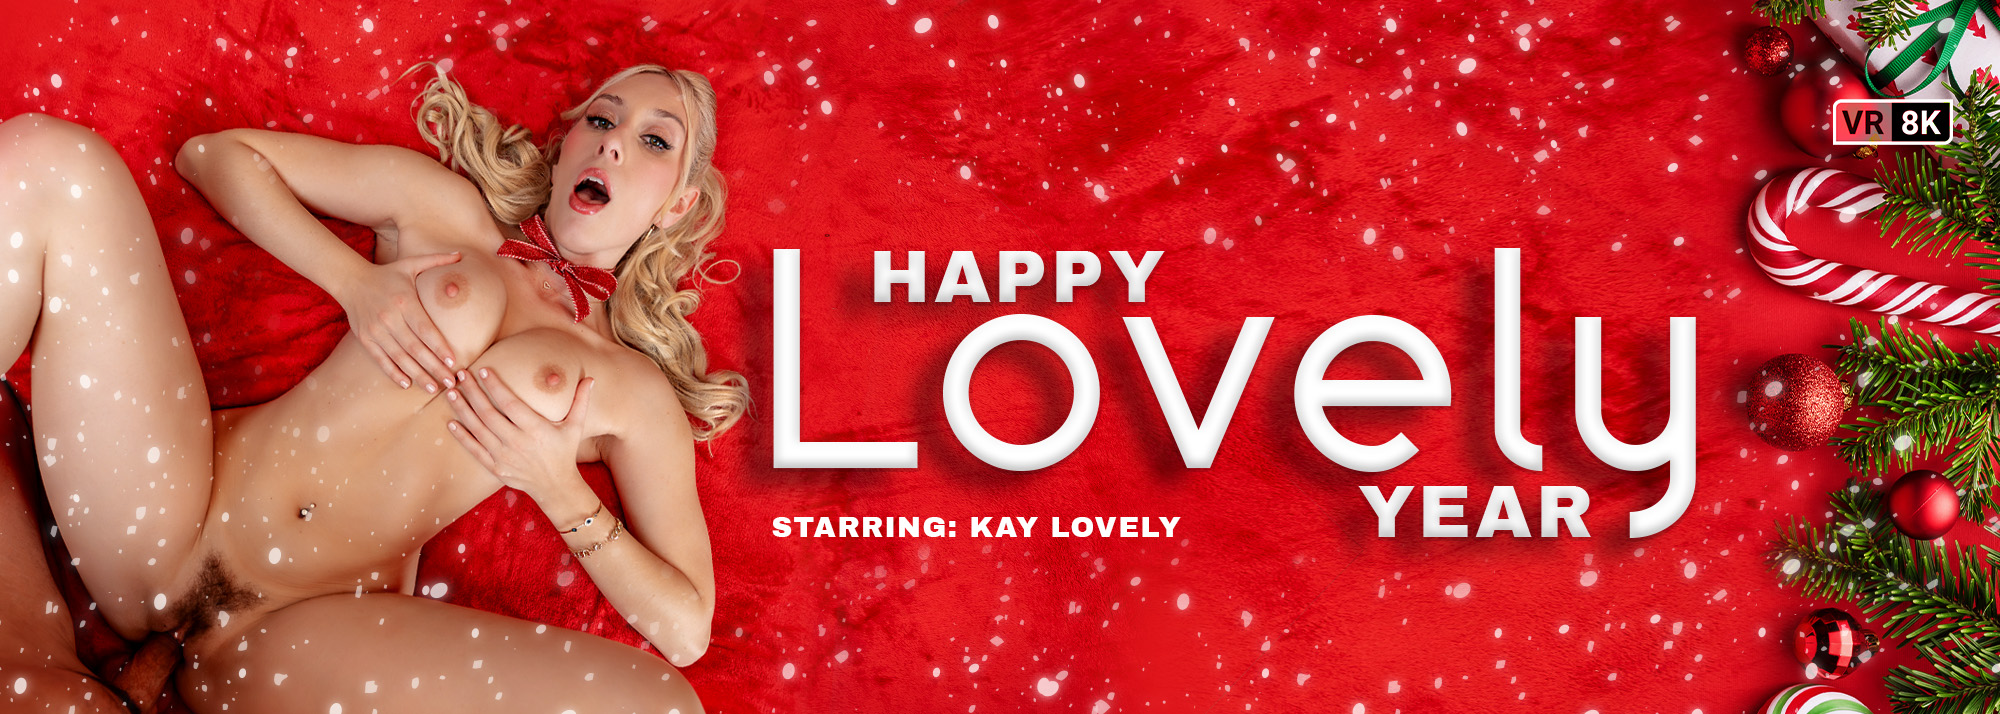 Happy Lovely Year - VR Porn Video, Starring: Kay Lovely